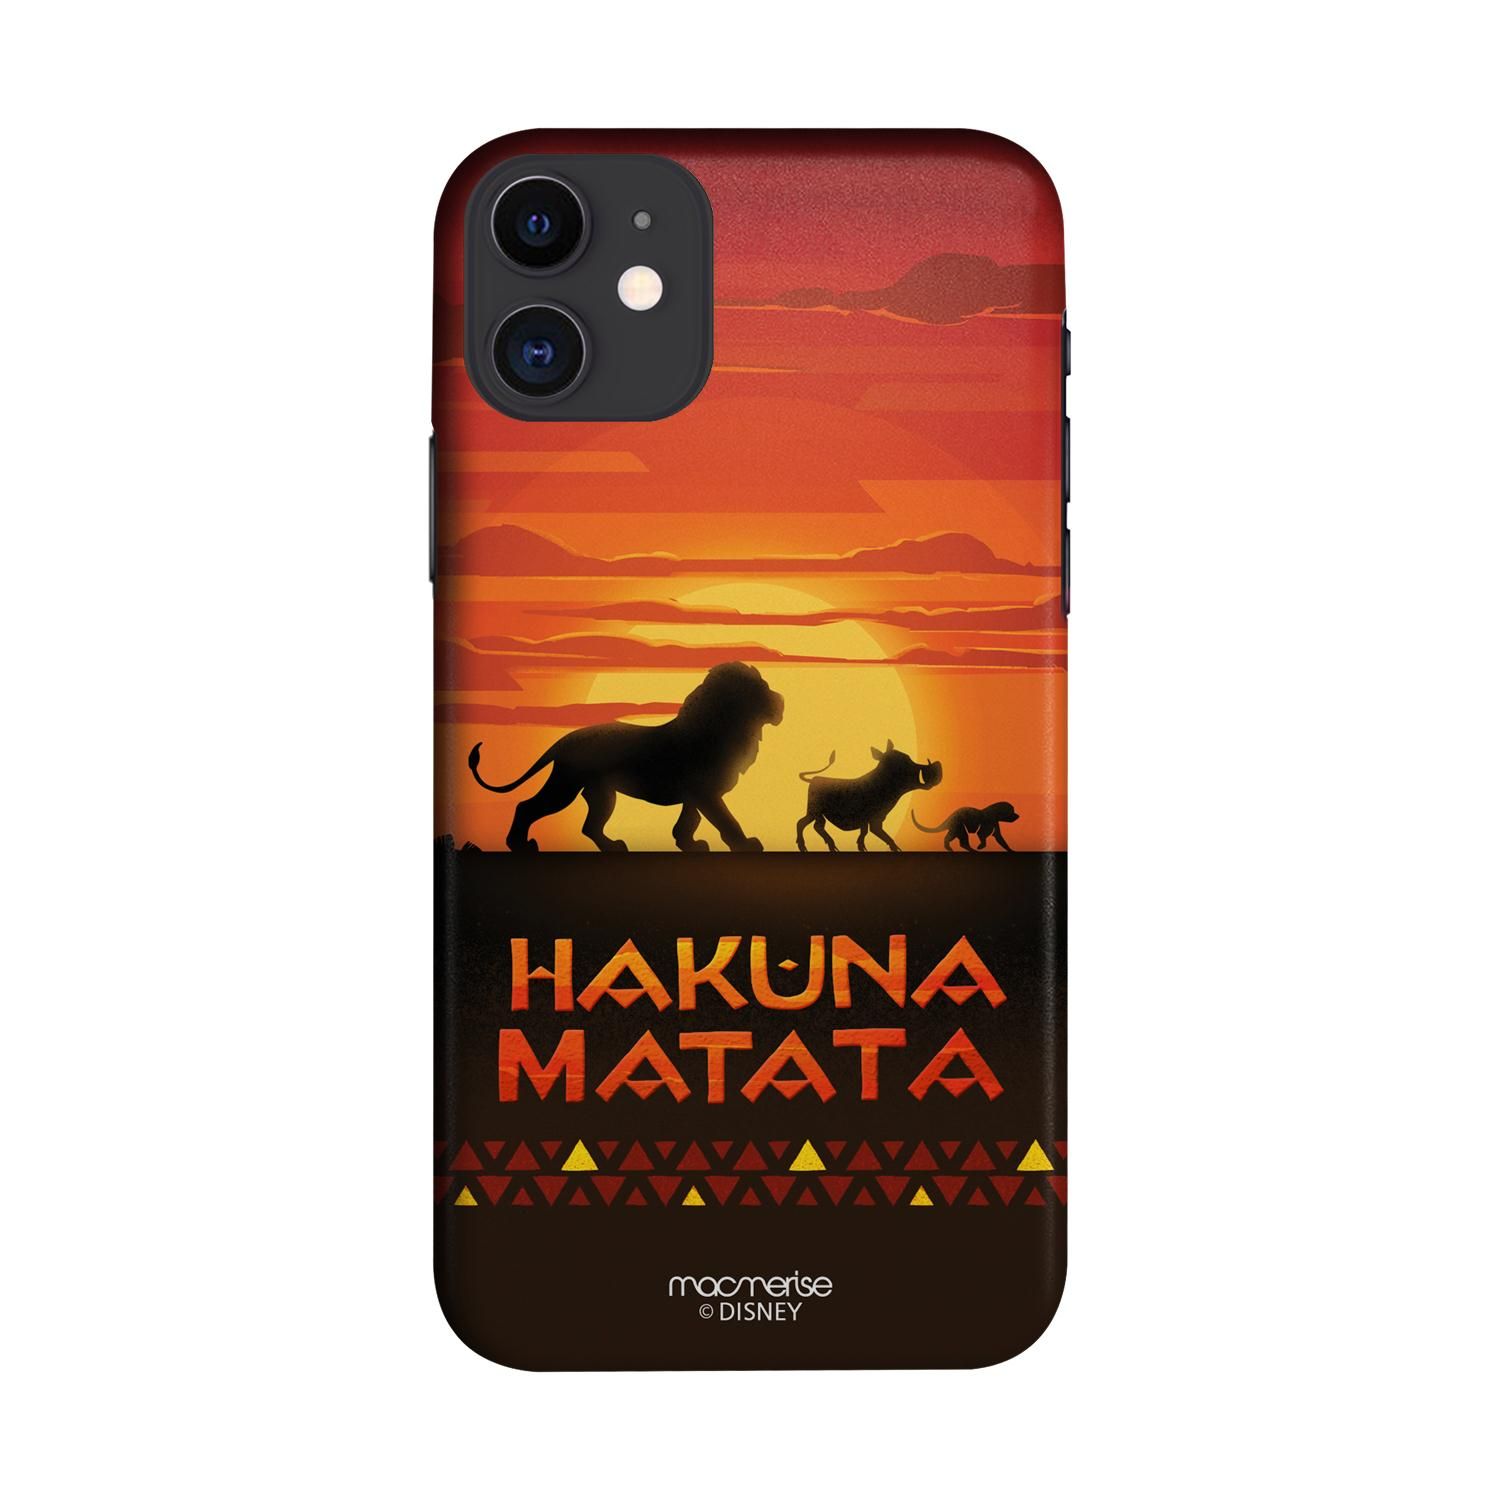 Buy Hakuna Matata - Sleek Phone Case for iPhone 11 Online